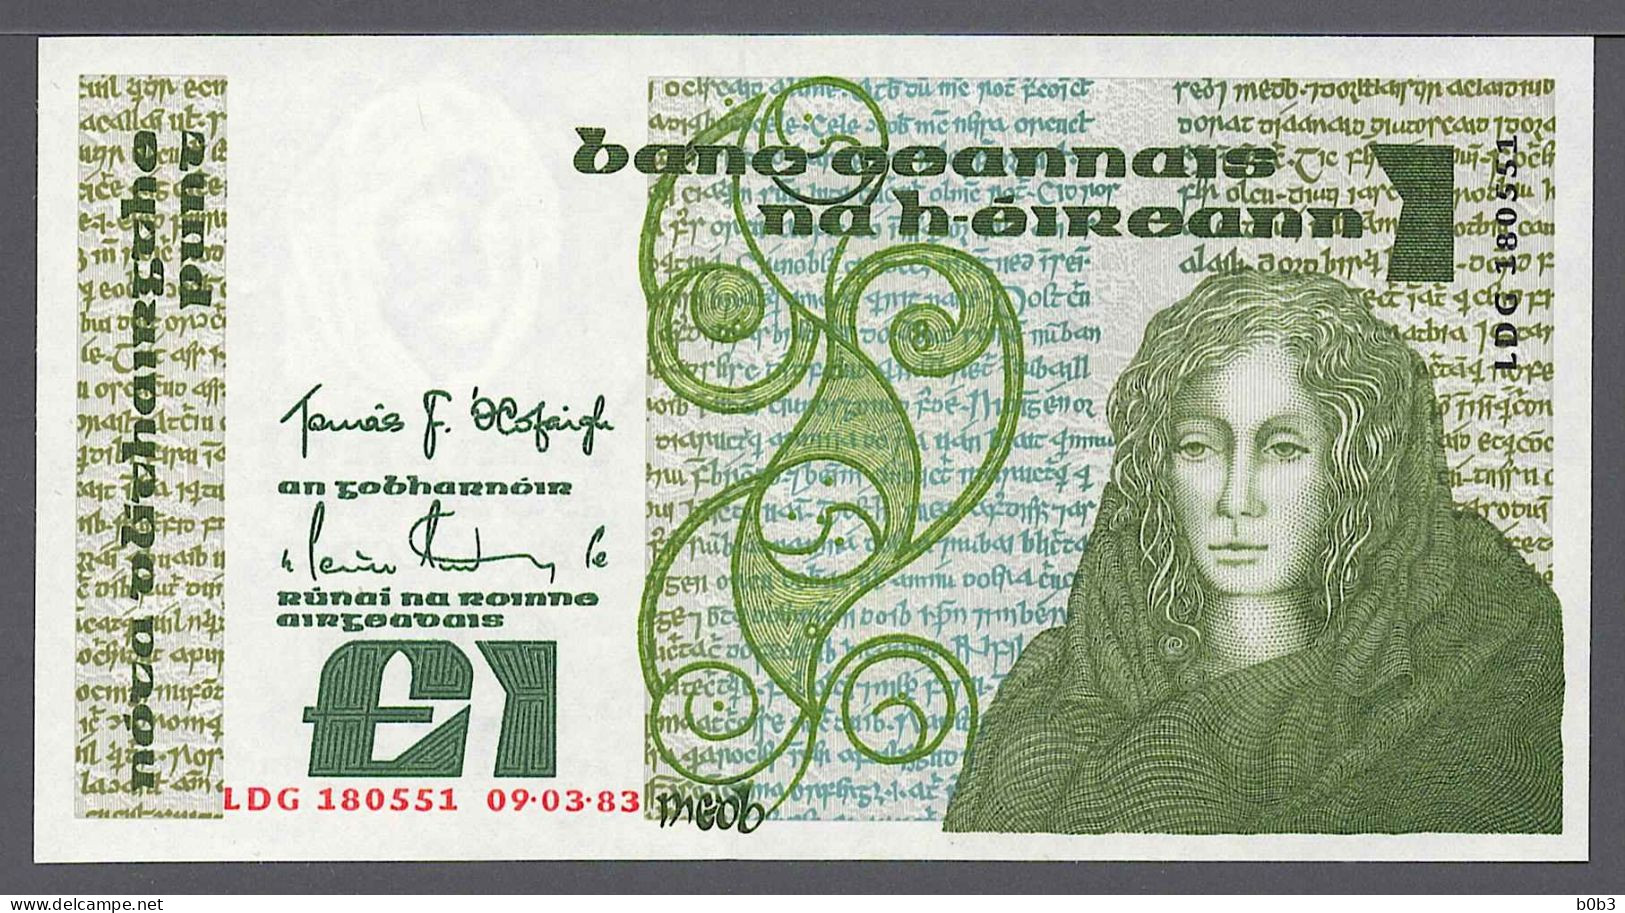 Ireland Irlande Irlanda 1983 1 Pound Pick 70c3 +aUNC - Irlanda